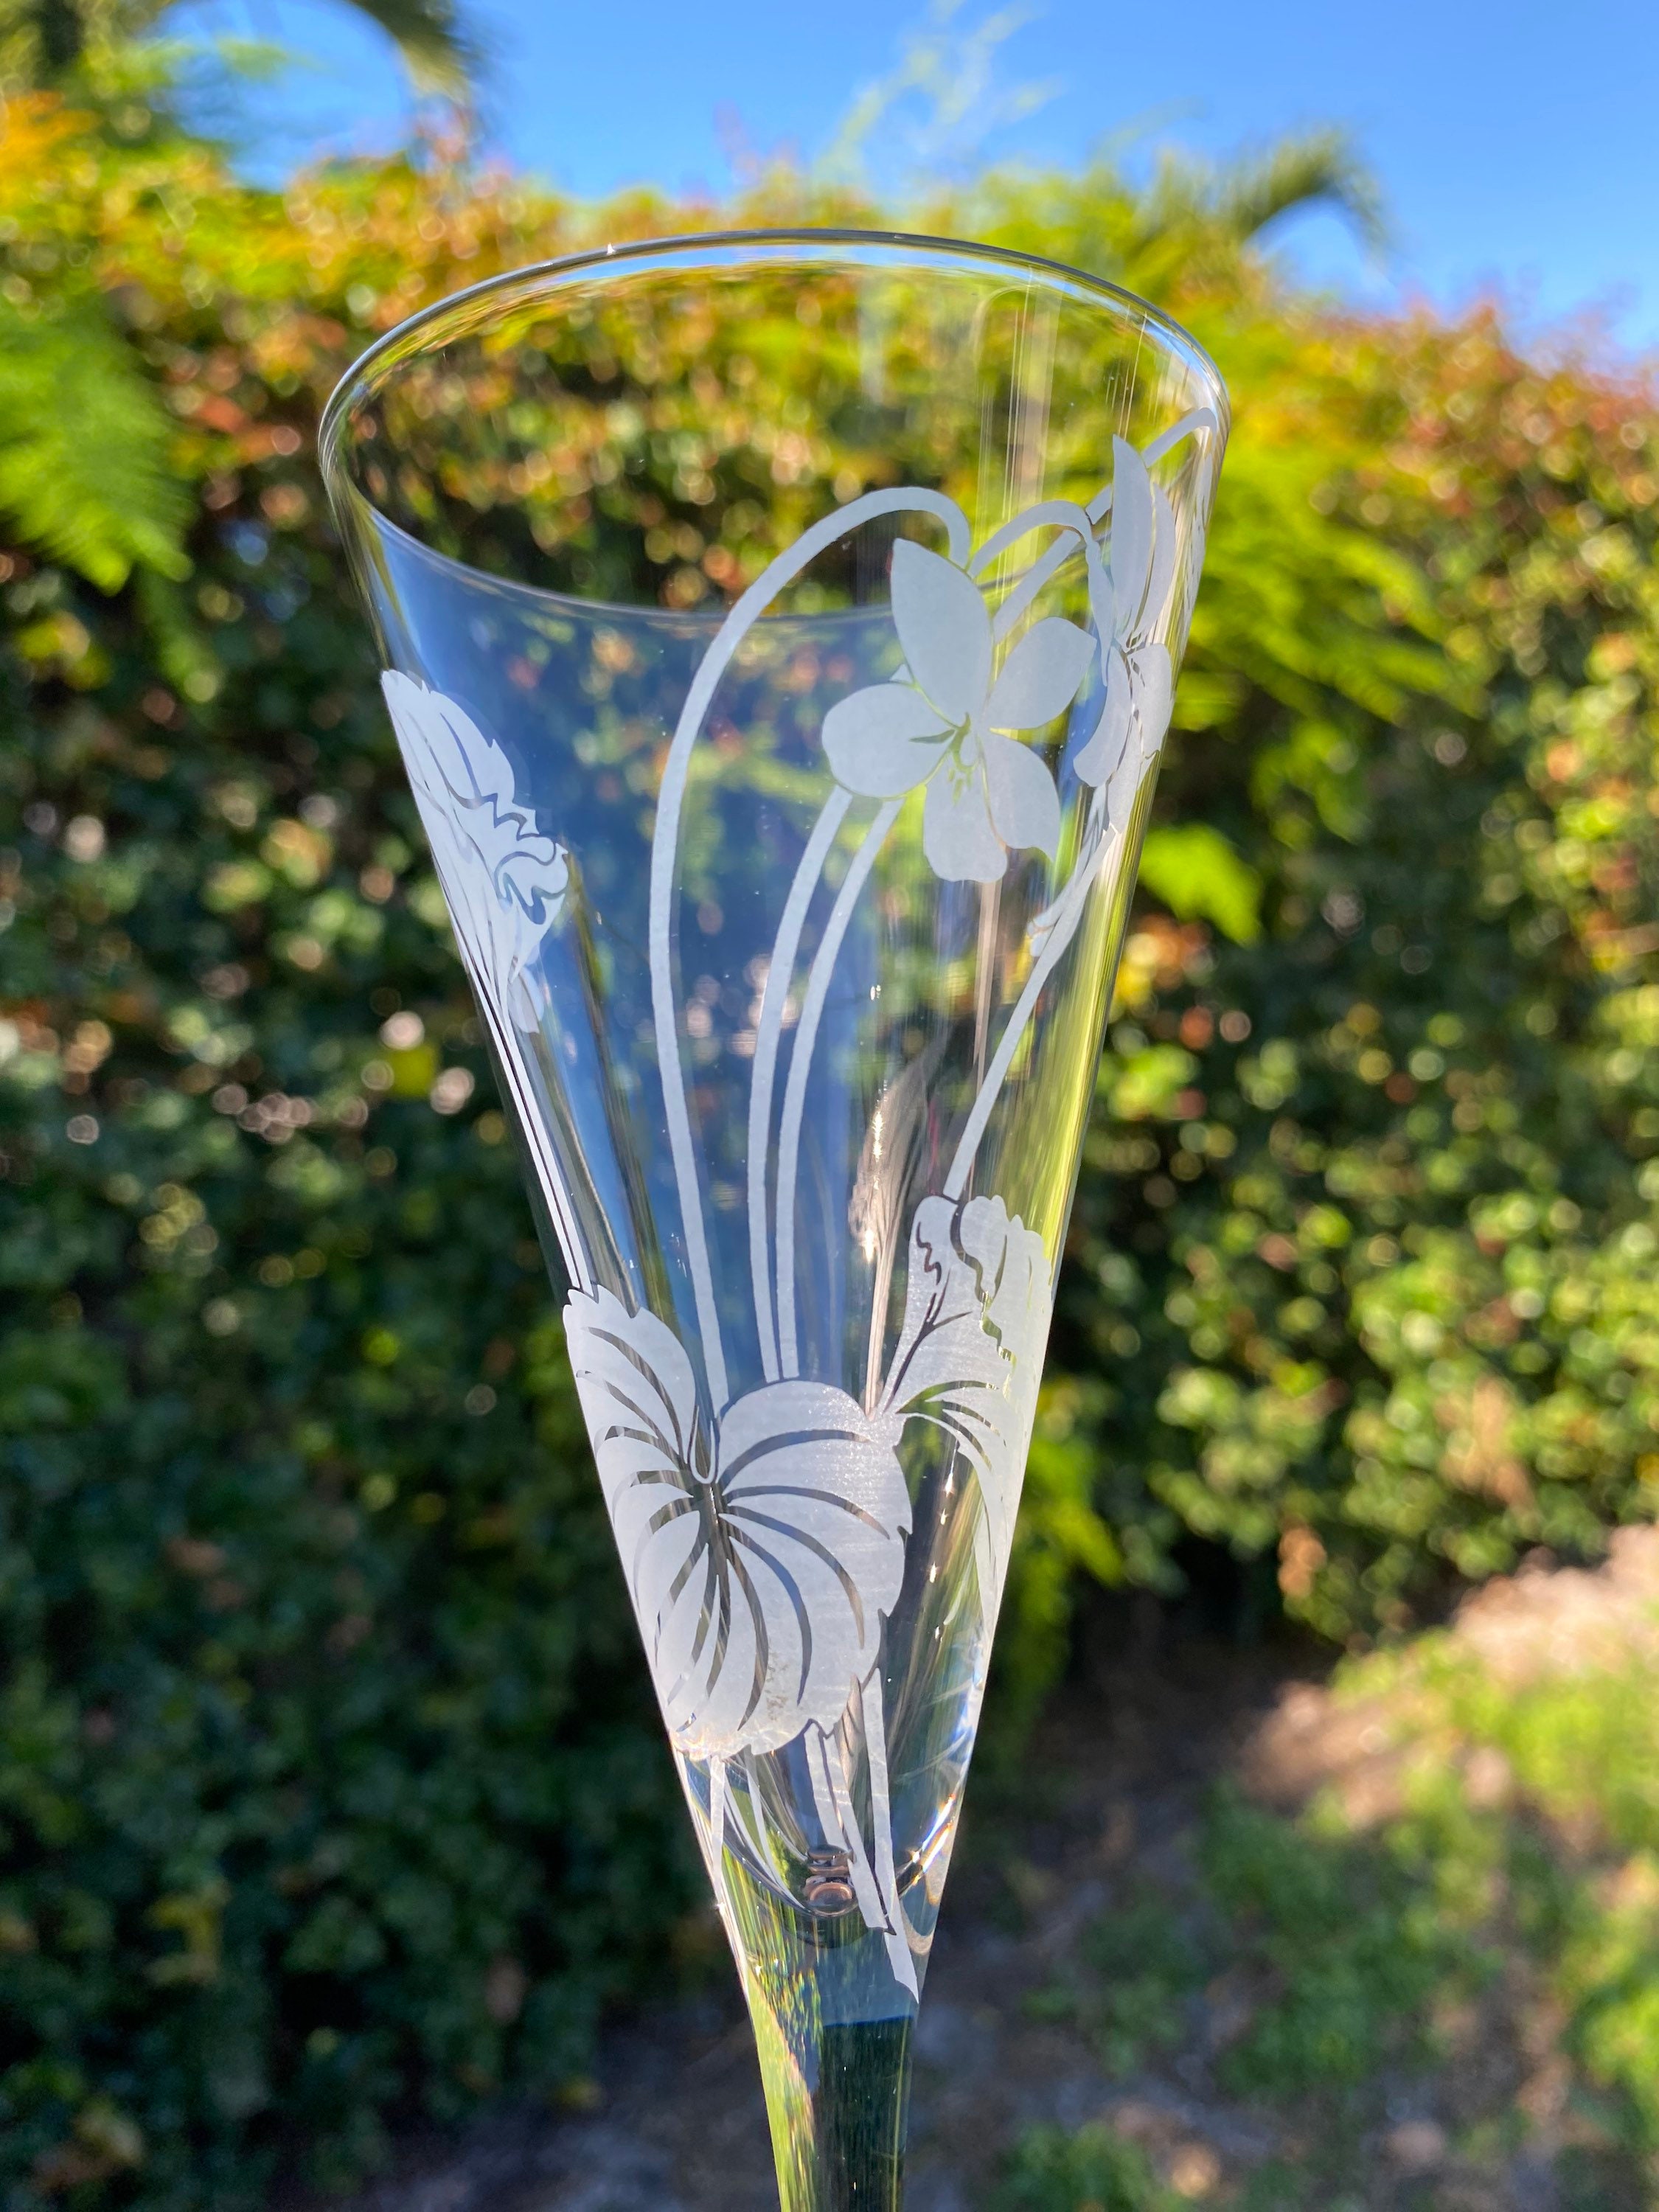 12 LES FLEURS Crystal Champagne Glasses the Franklin Mint Full Set Perrier  Jouet Flowers of France Austrian Crystal Flutes 